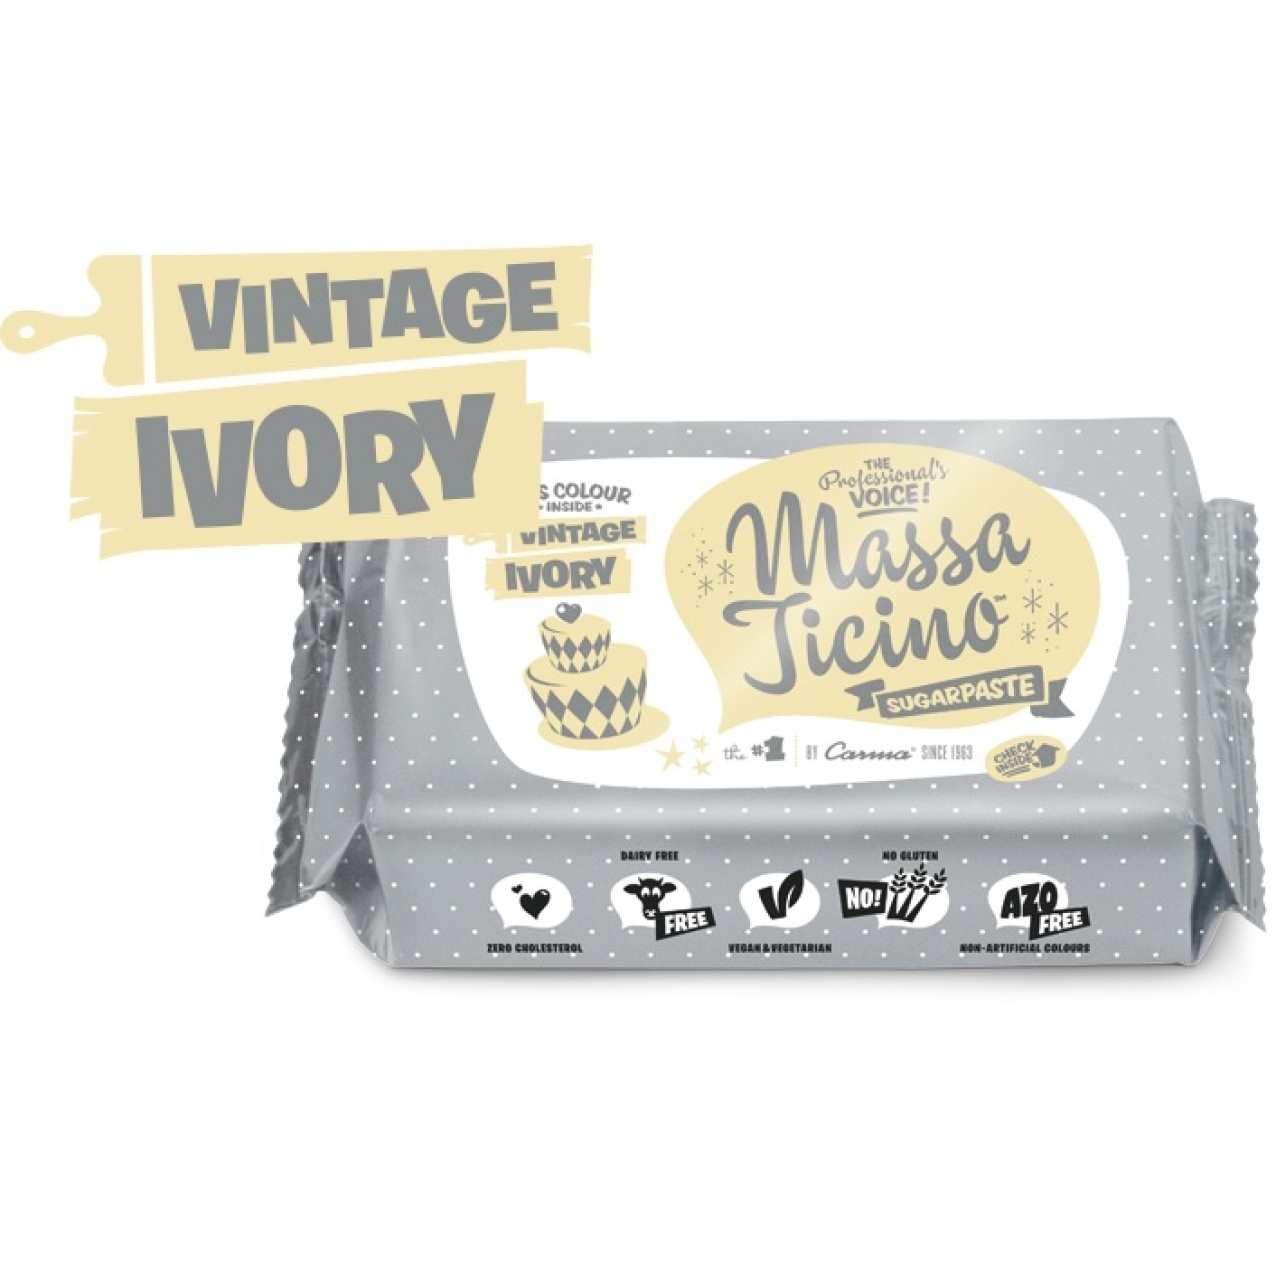 MTT Massa Ticino Tropic Fondant Ausrollfondant Vintage Ivory, 250 g